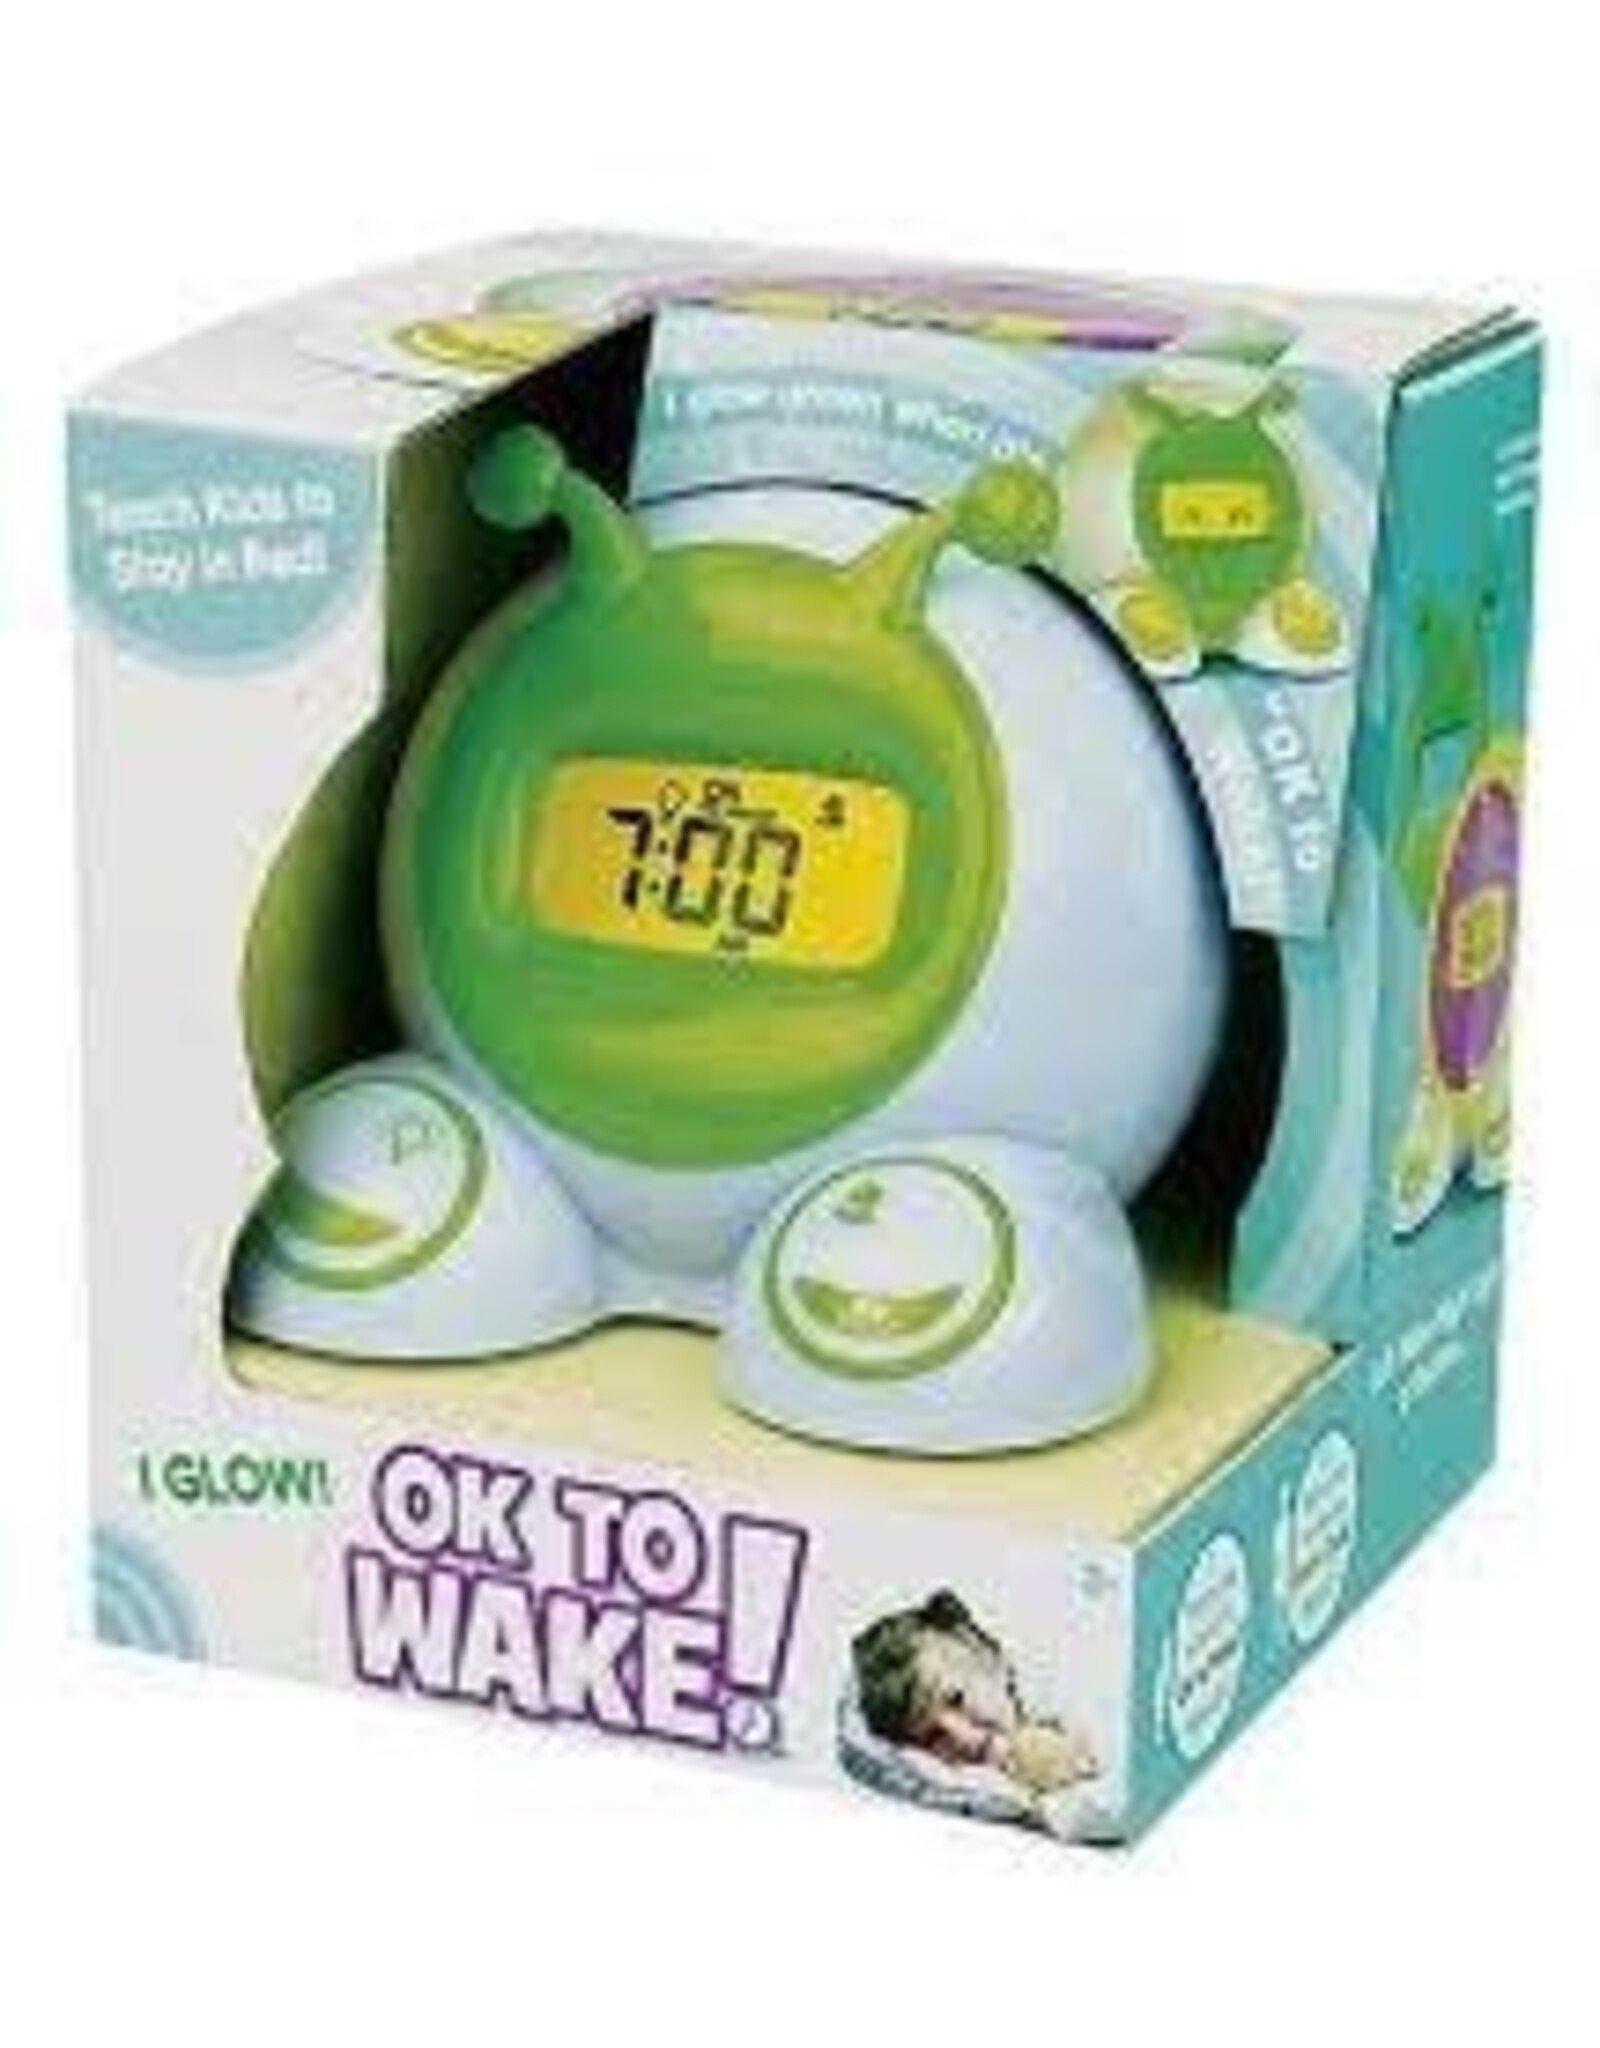 OK to Wake Alarm Clock